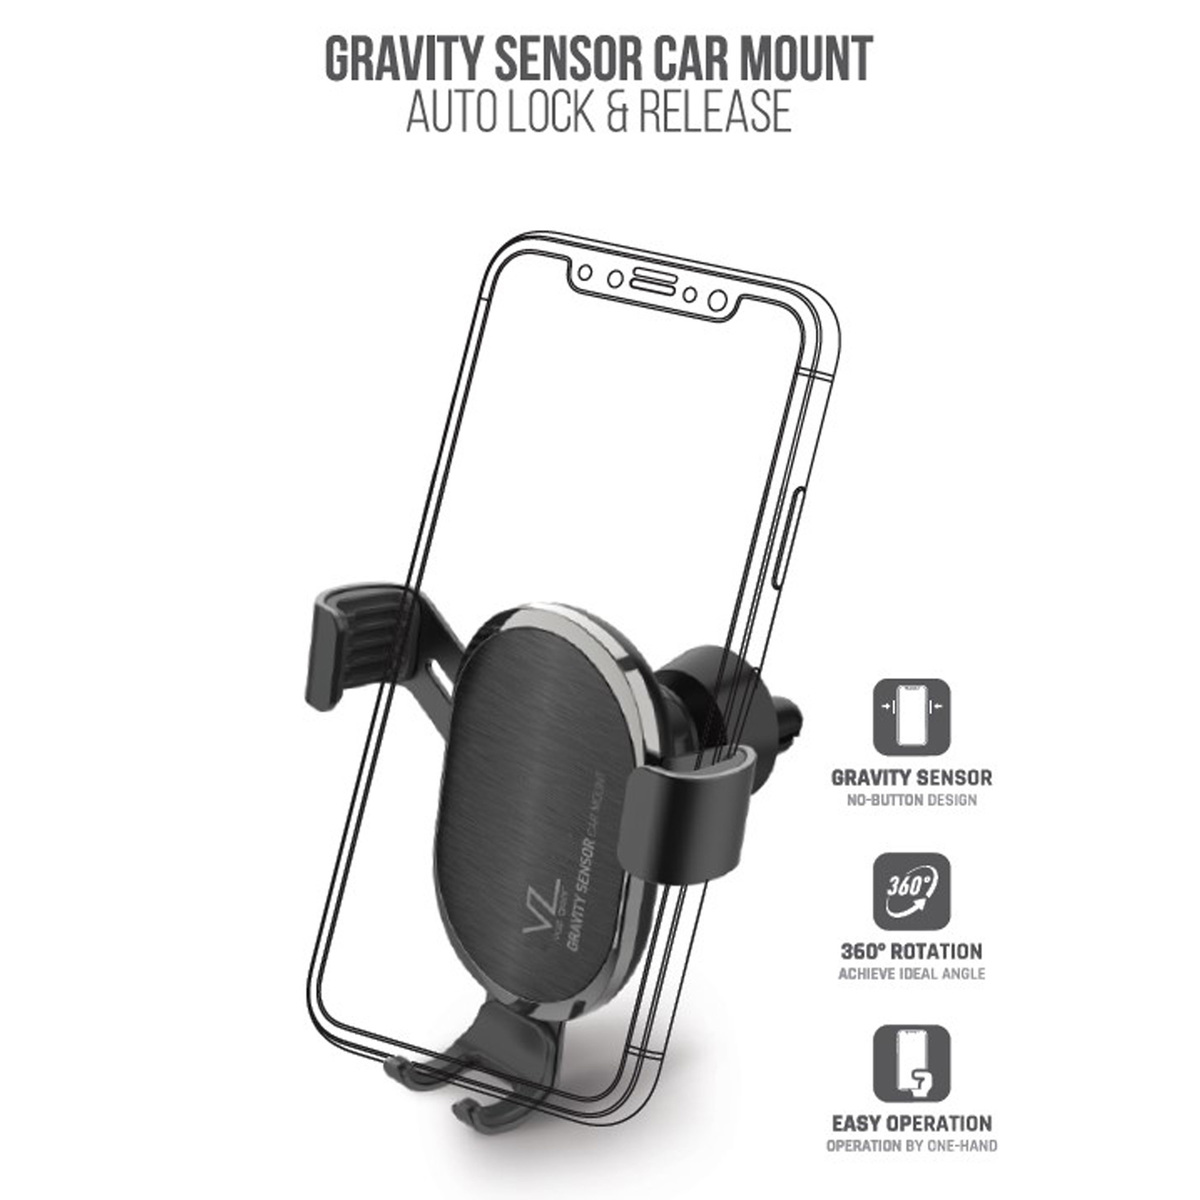 Voz Gravity Sensor Mobile Car Mount with Auto Lock, VCH4